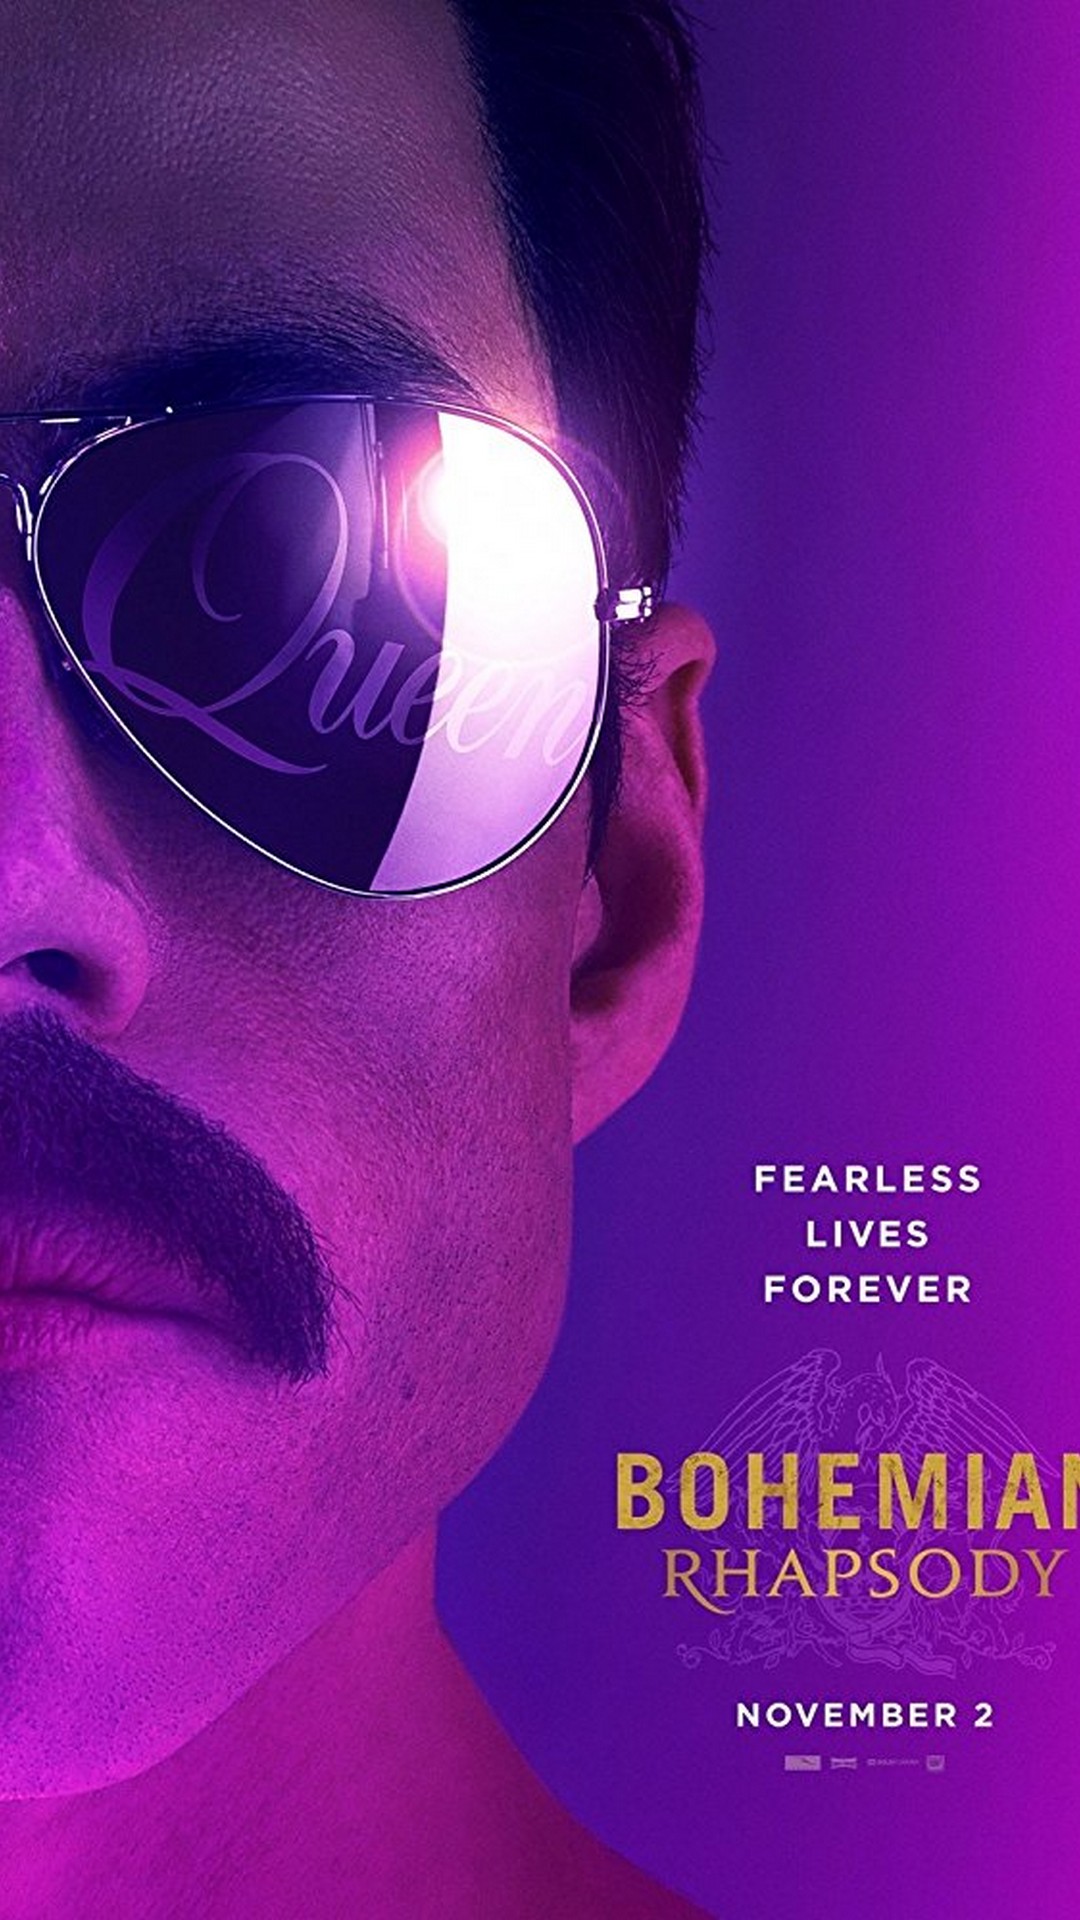 Bohemian Rhapsody 2018 Movie Poster Wallpapers